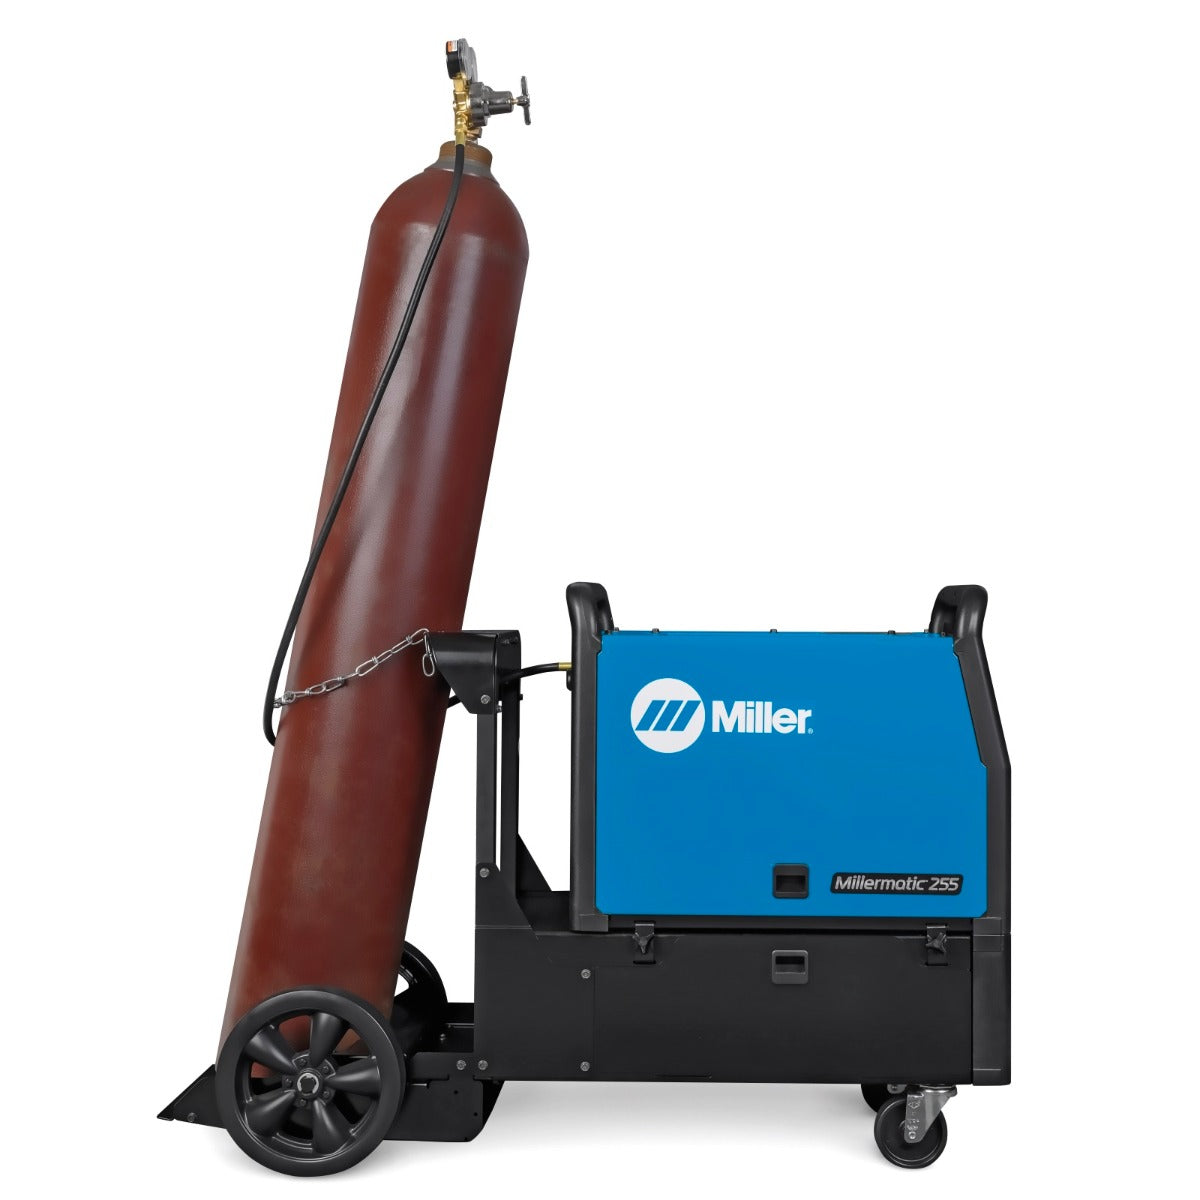 Miller Millermatic 255 MIG/Pulsed MIG Welder- 208/240V with Running Gear - 951766